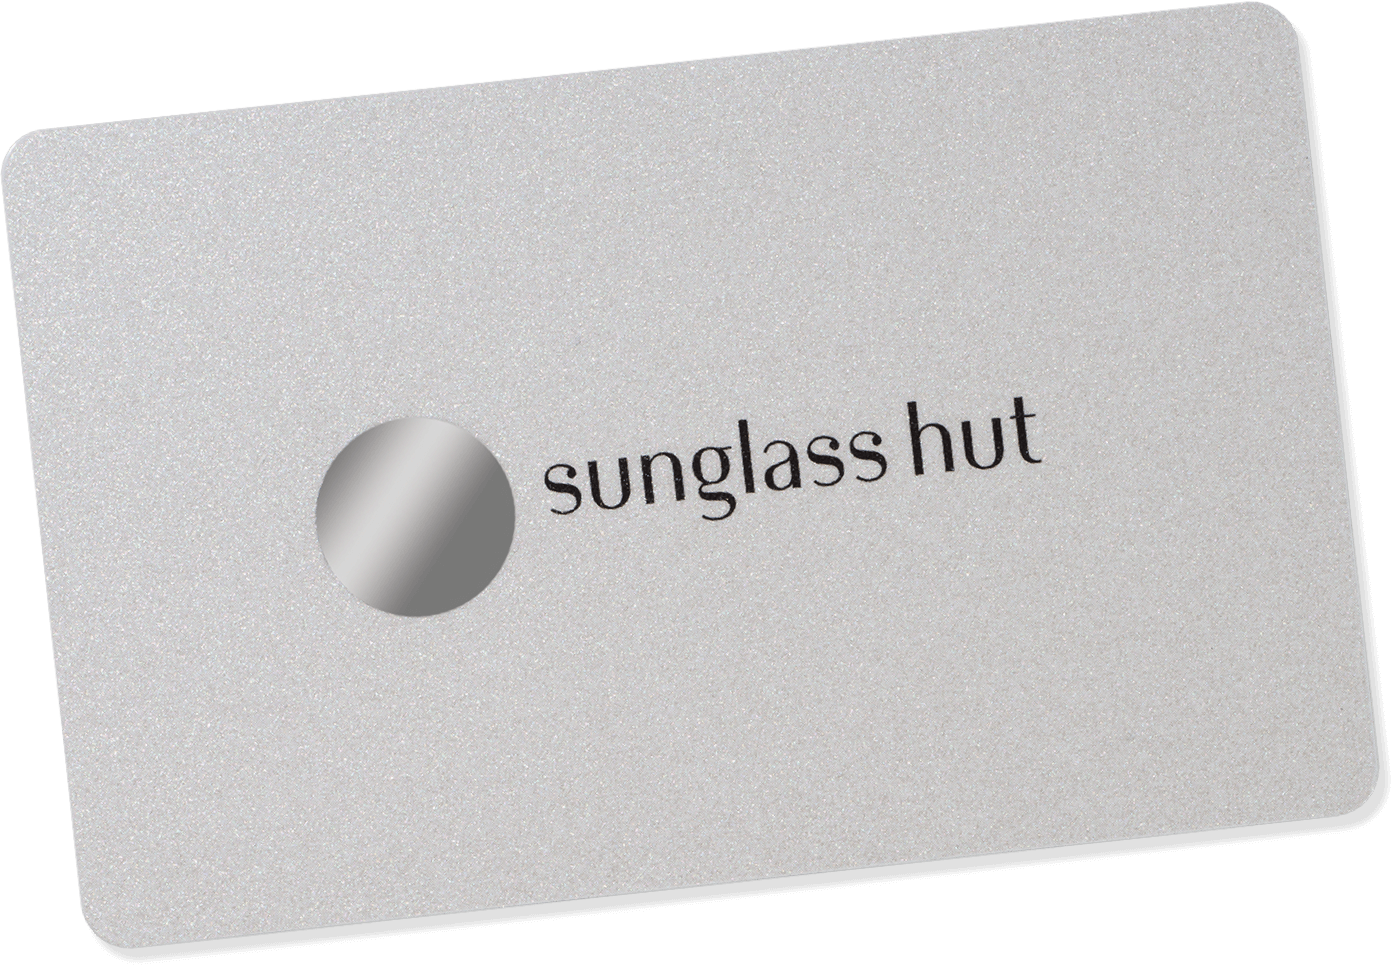 SALE! Up to 70% discount on your favorite pair from Sunglass Hut! # sunglasses #summer #citymall #citymall_lebanon #sunglasshut | Instagram